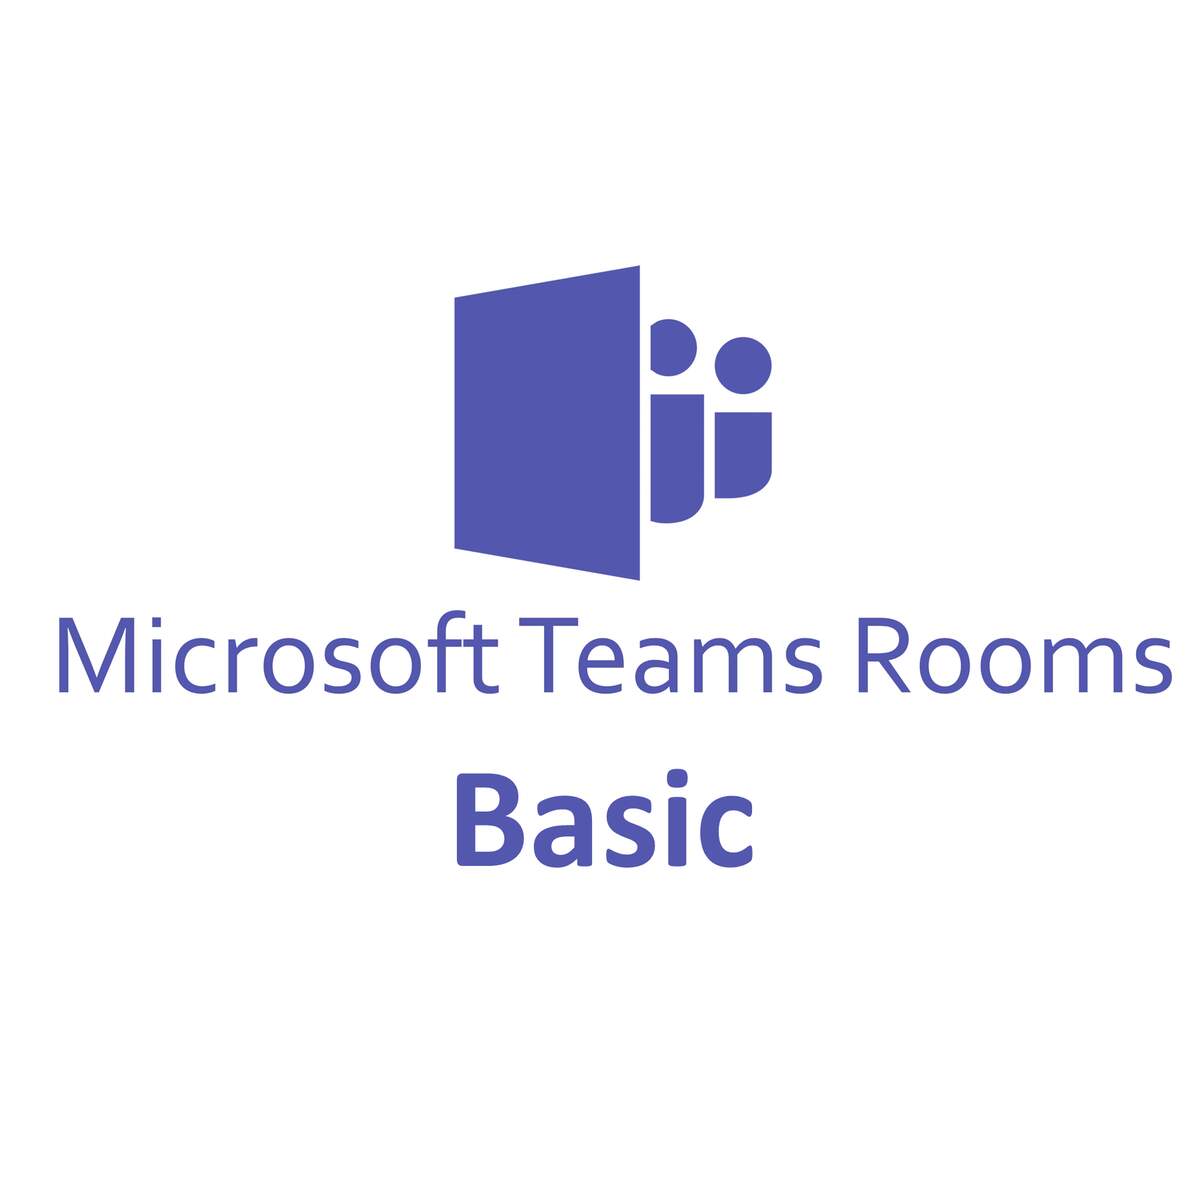 Licence Microsoft Teams Rooms Basic image